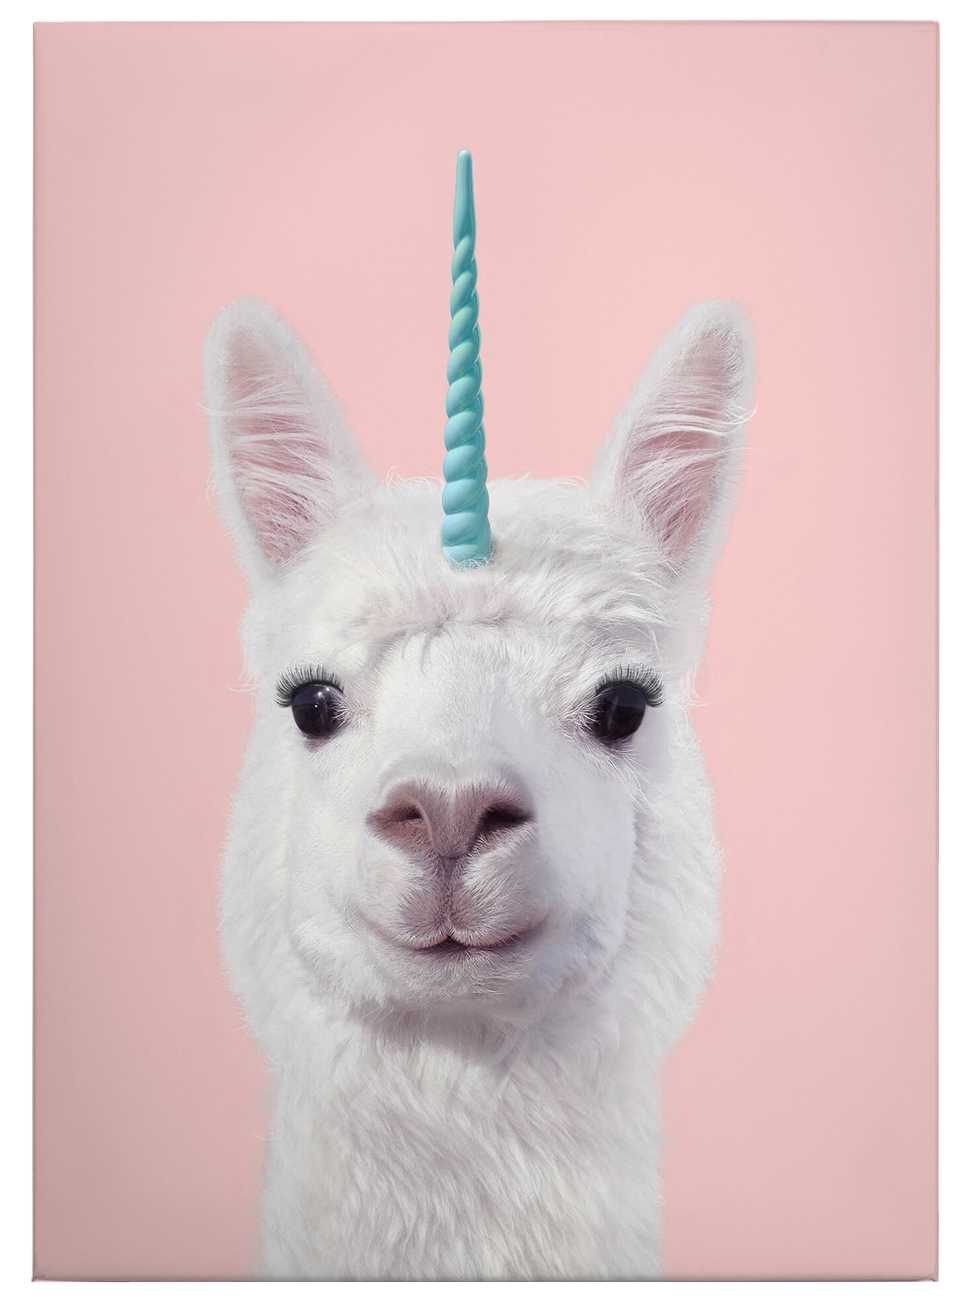             Canvas print alpaca unicorn by Fuentes – pink, white
        